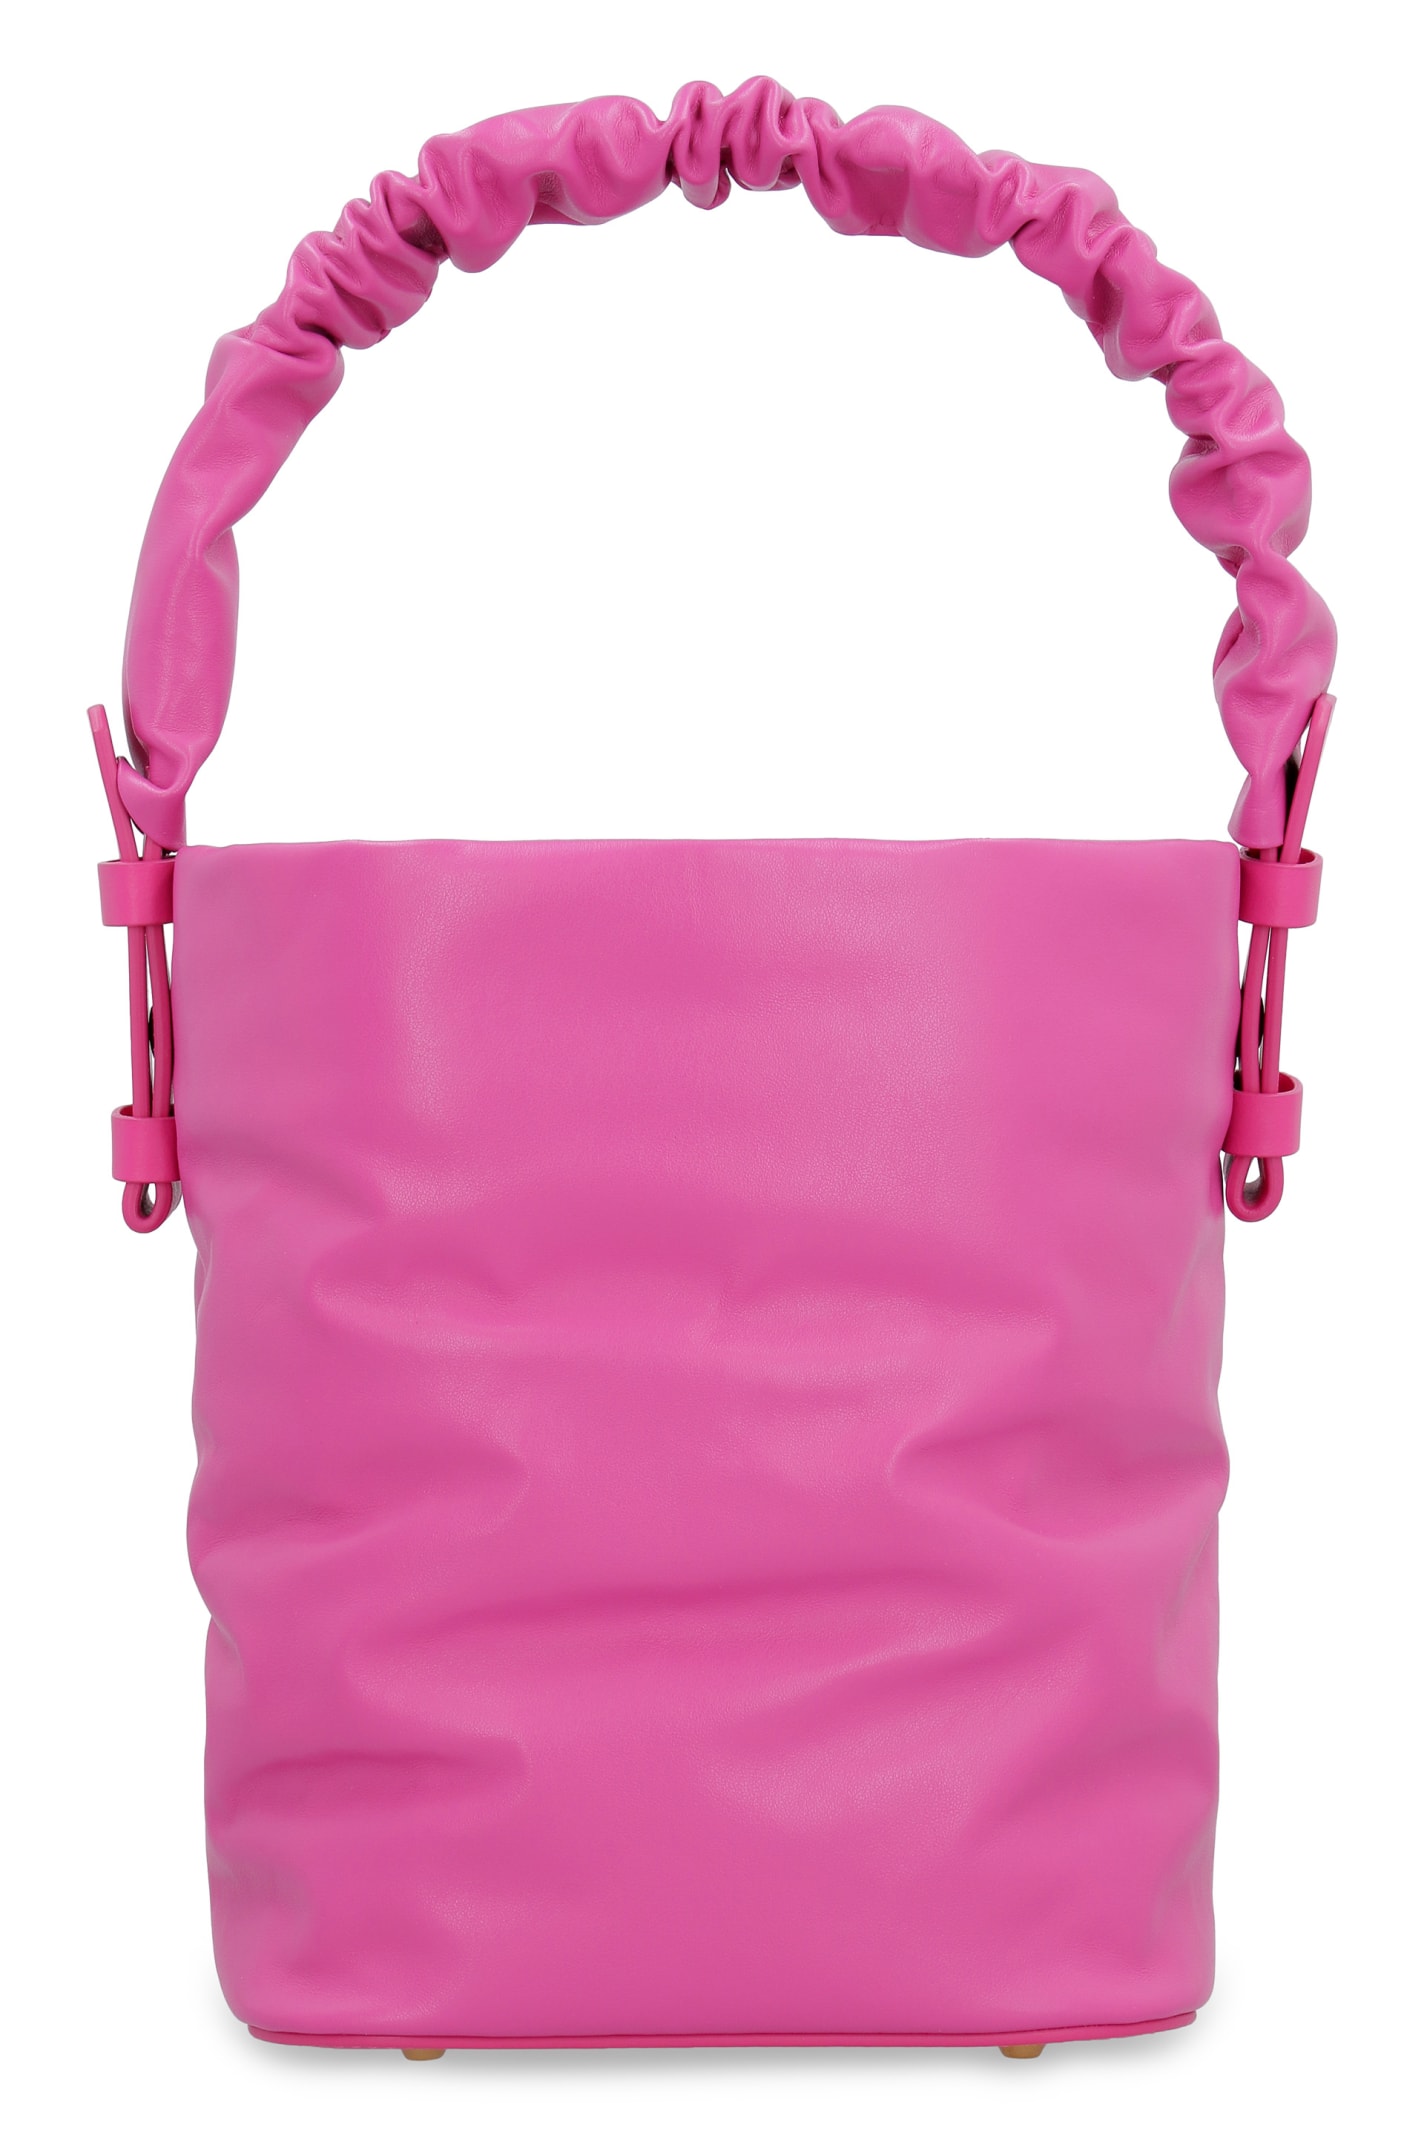 Nico GianiNico Giani Adenia Soft Leather Bucket Bag | DailyMail